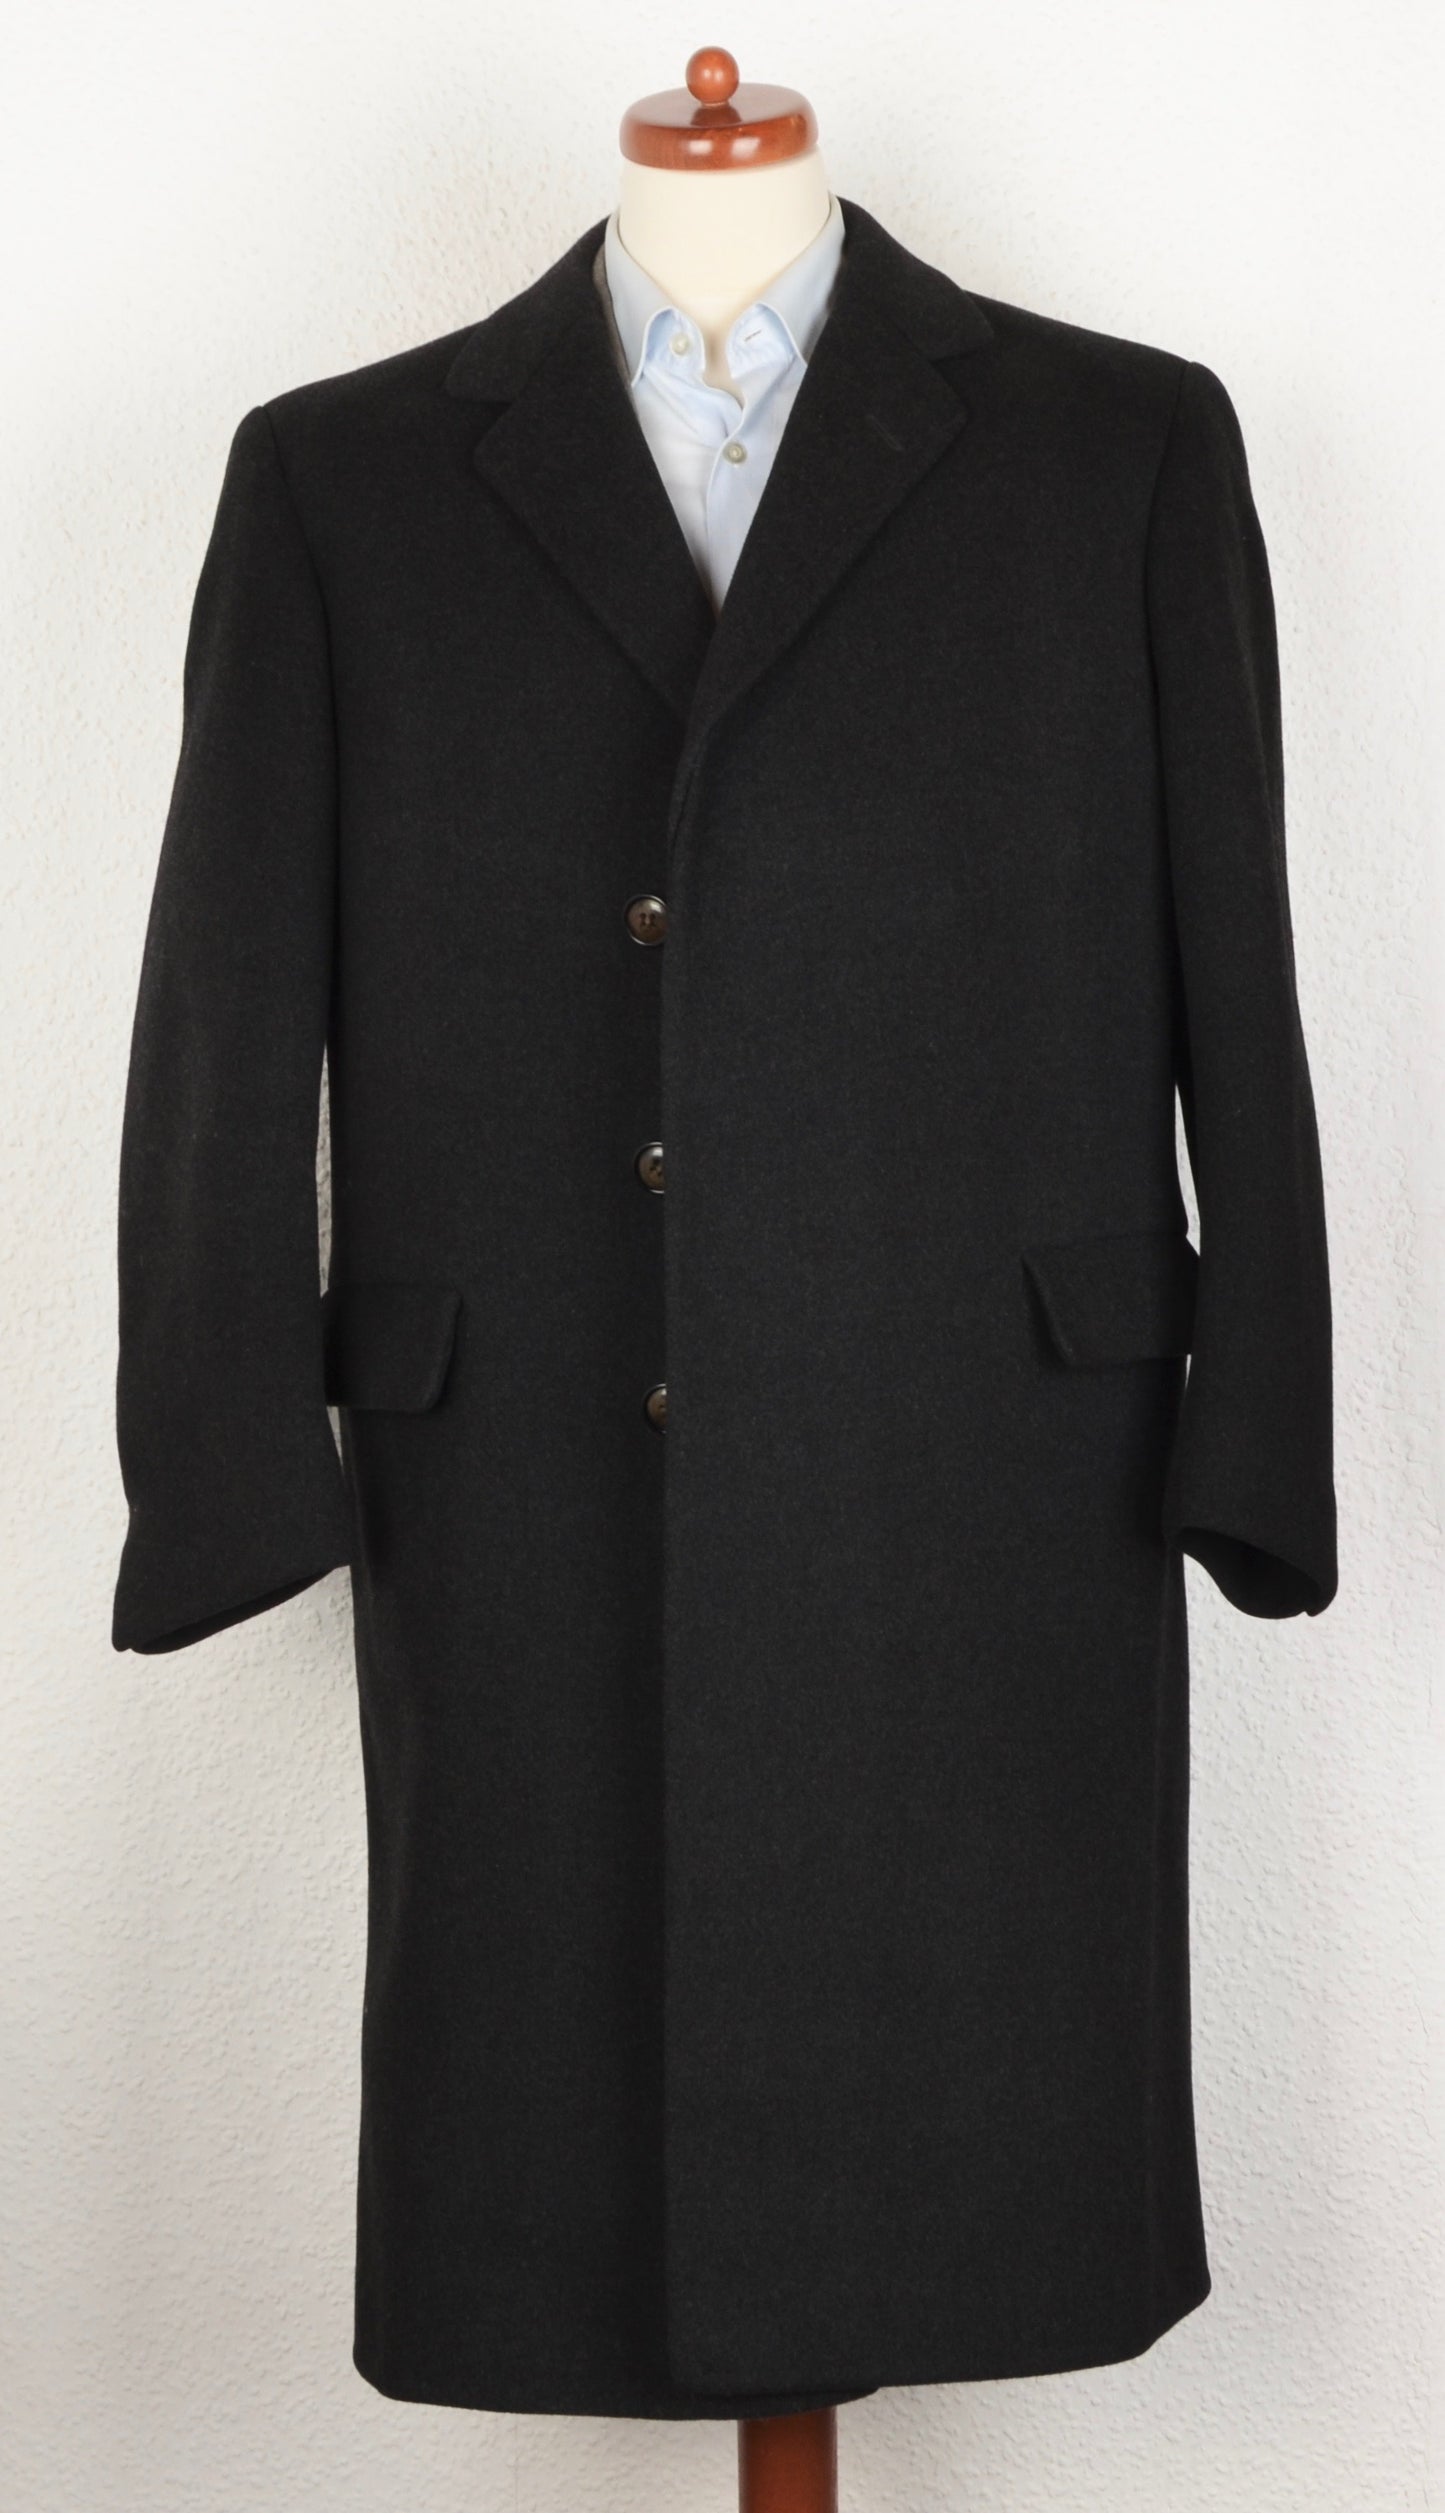 Handmade Overcoat by Minarik for Baur Foradori - Charcoal